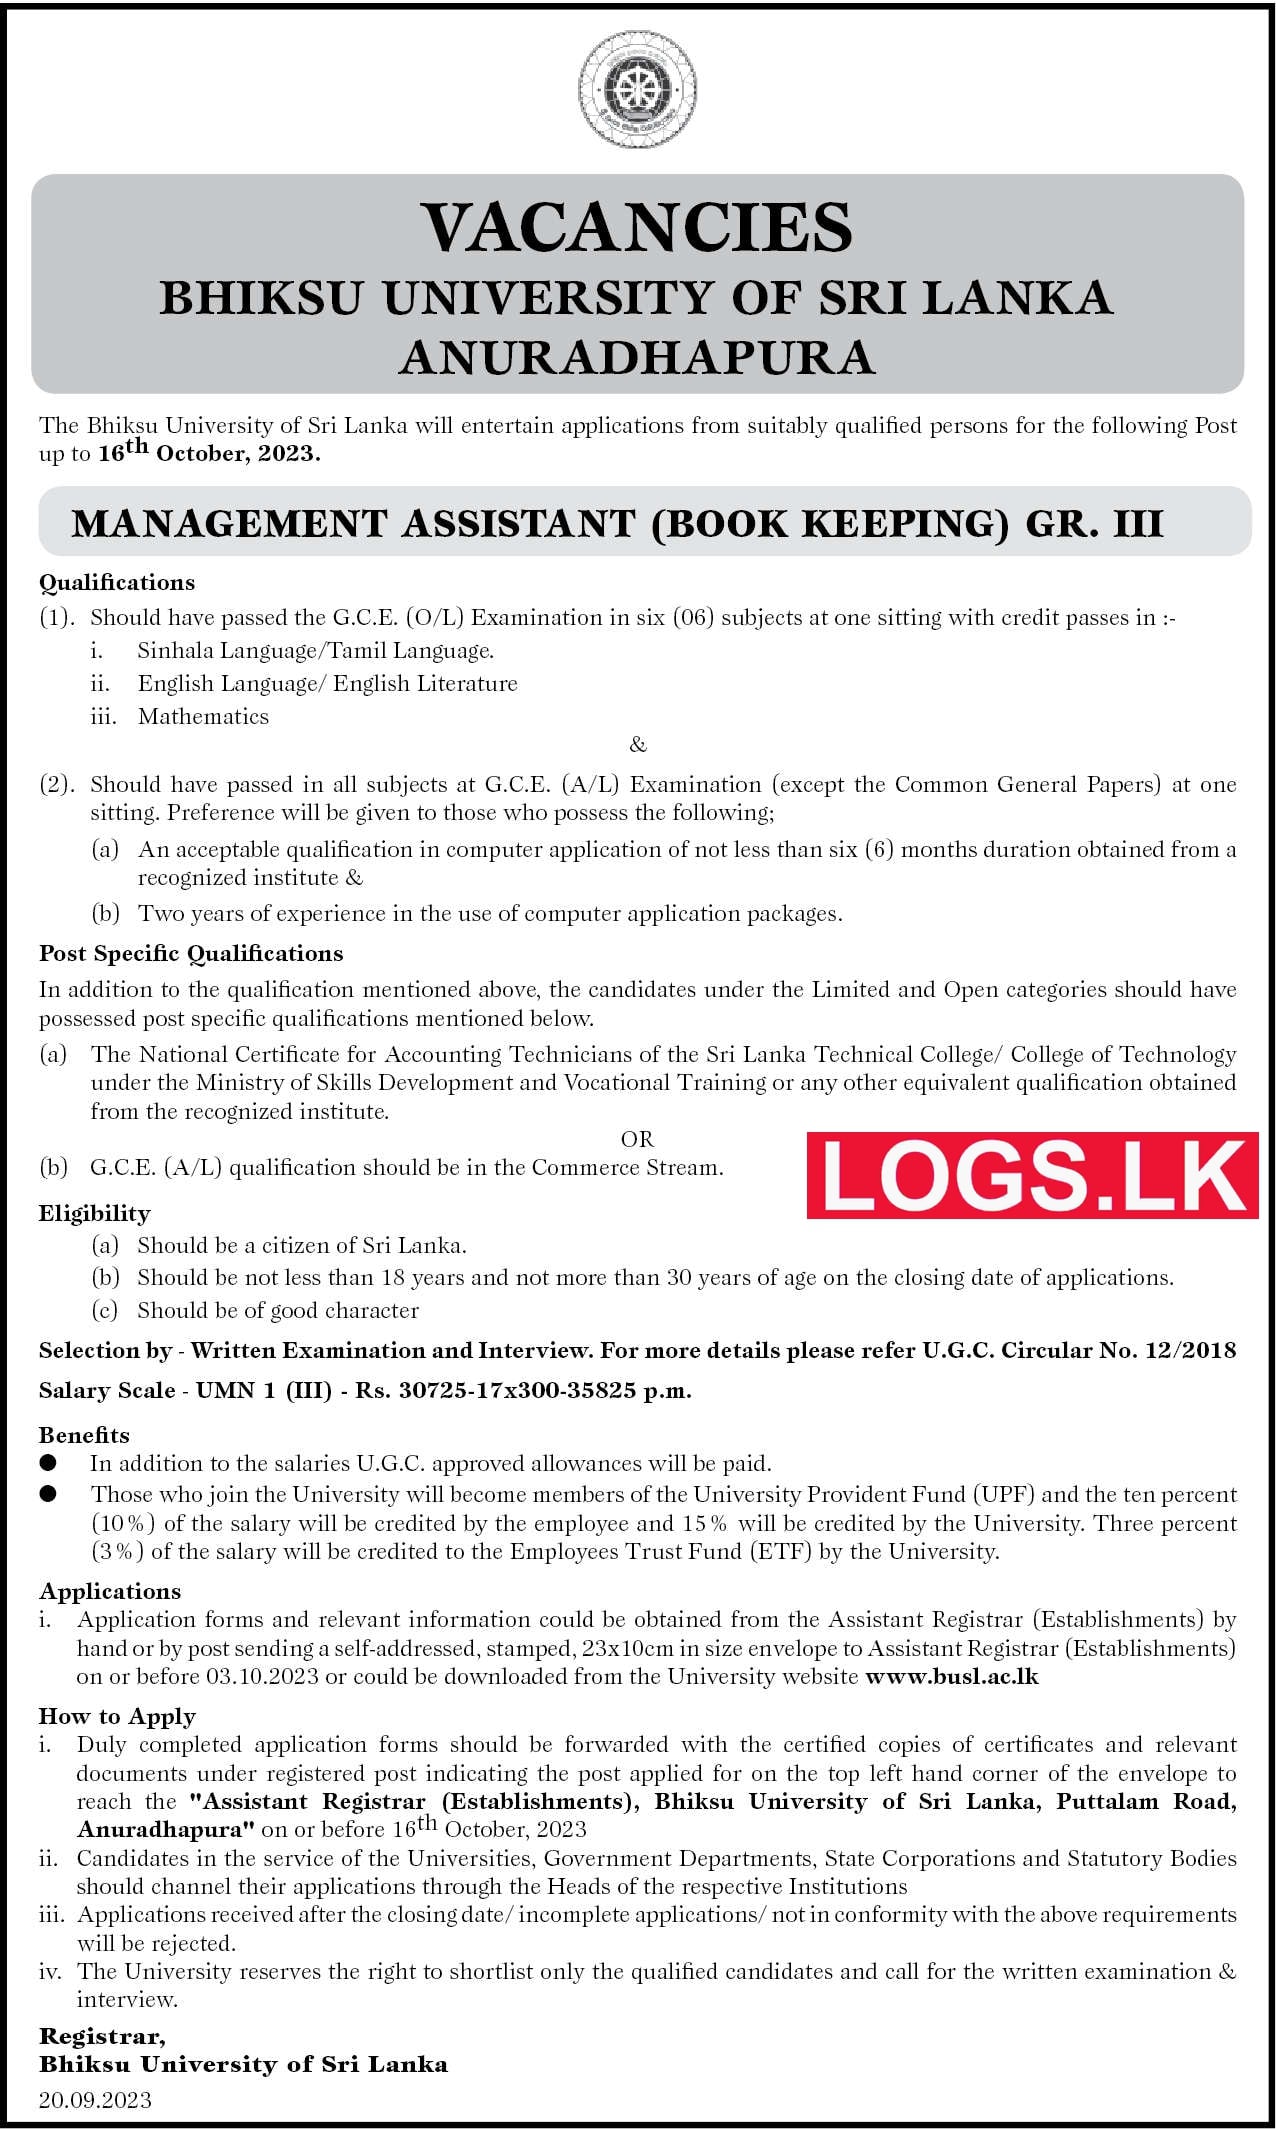 Management Assistant - Bhiksu University of Sri Lanka Anuradhapura Vacancies 2023 Application Form